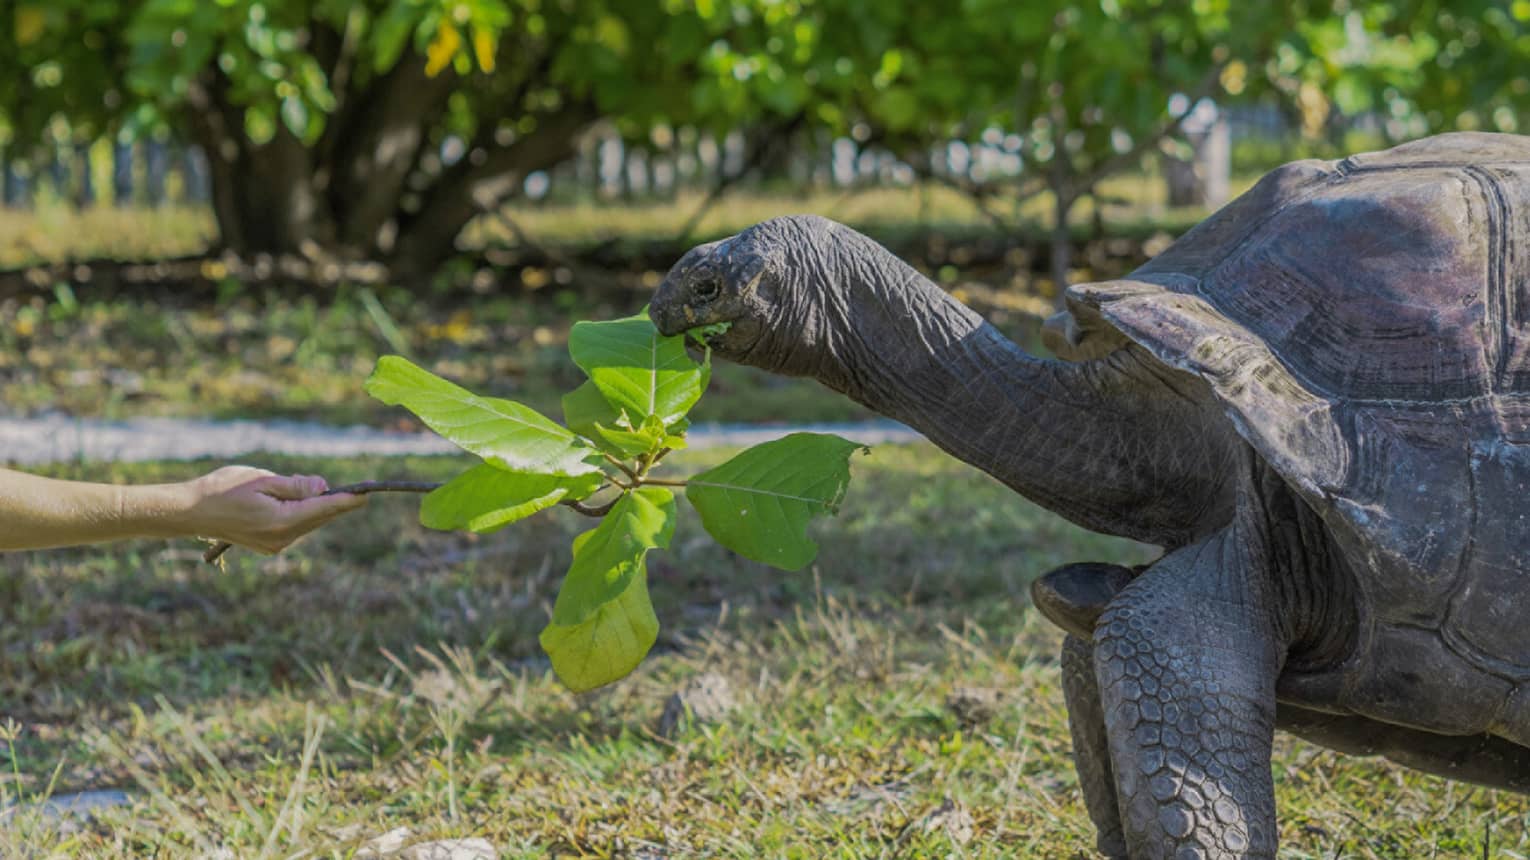 Tortoise eating a leaf